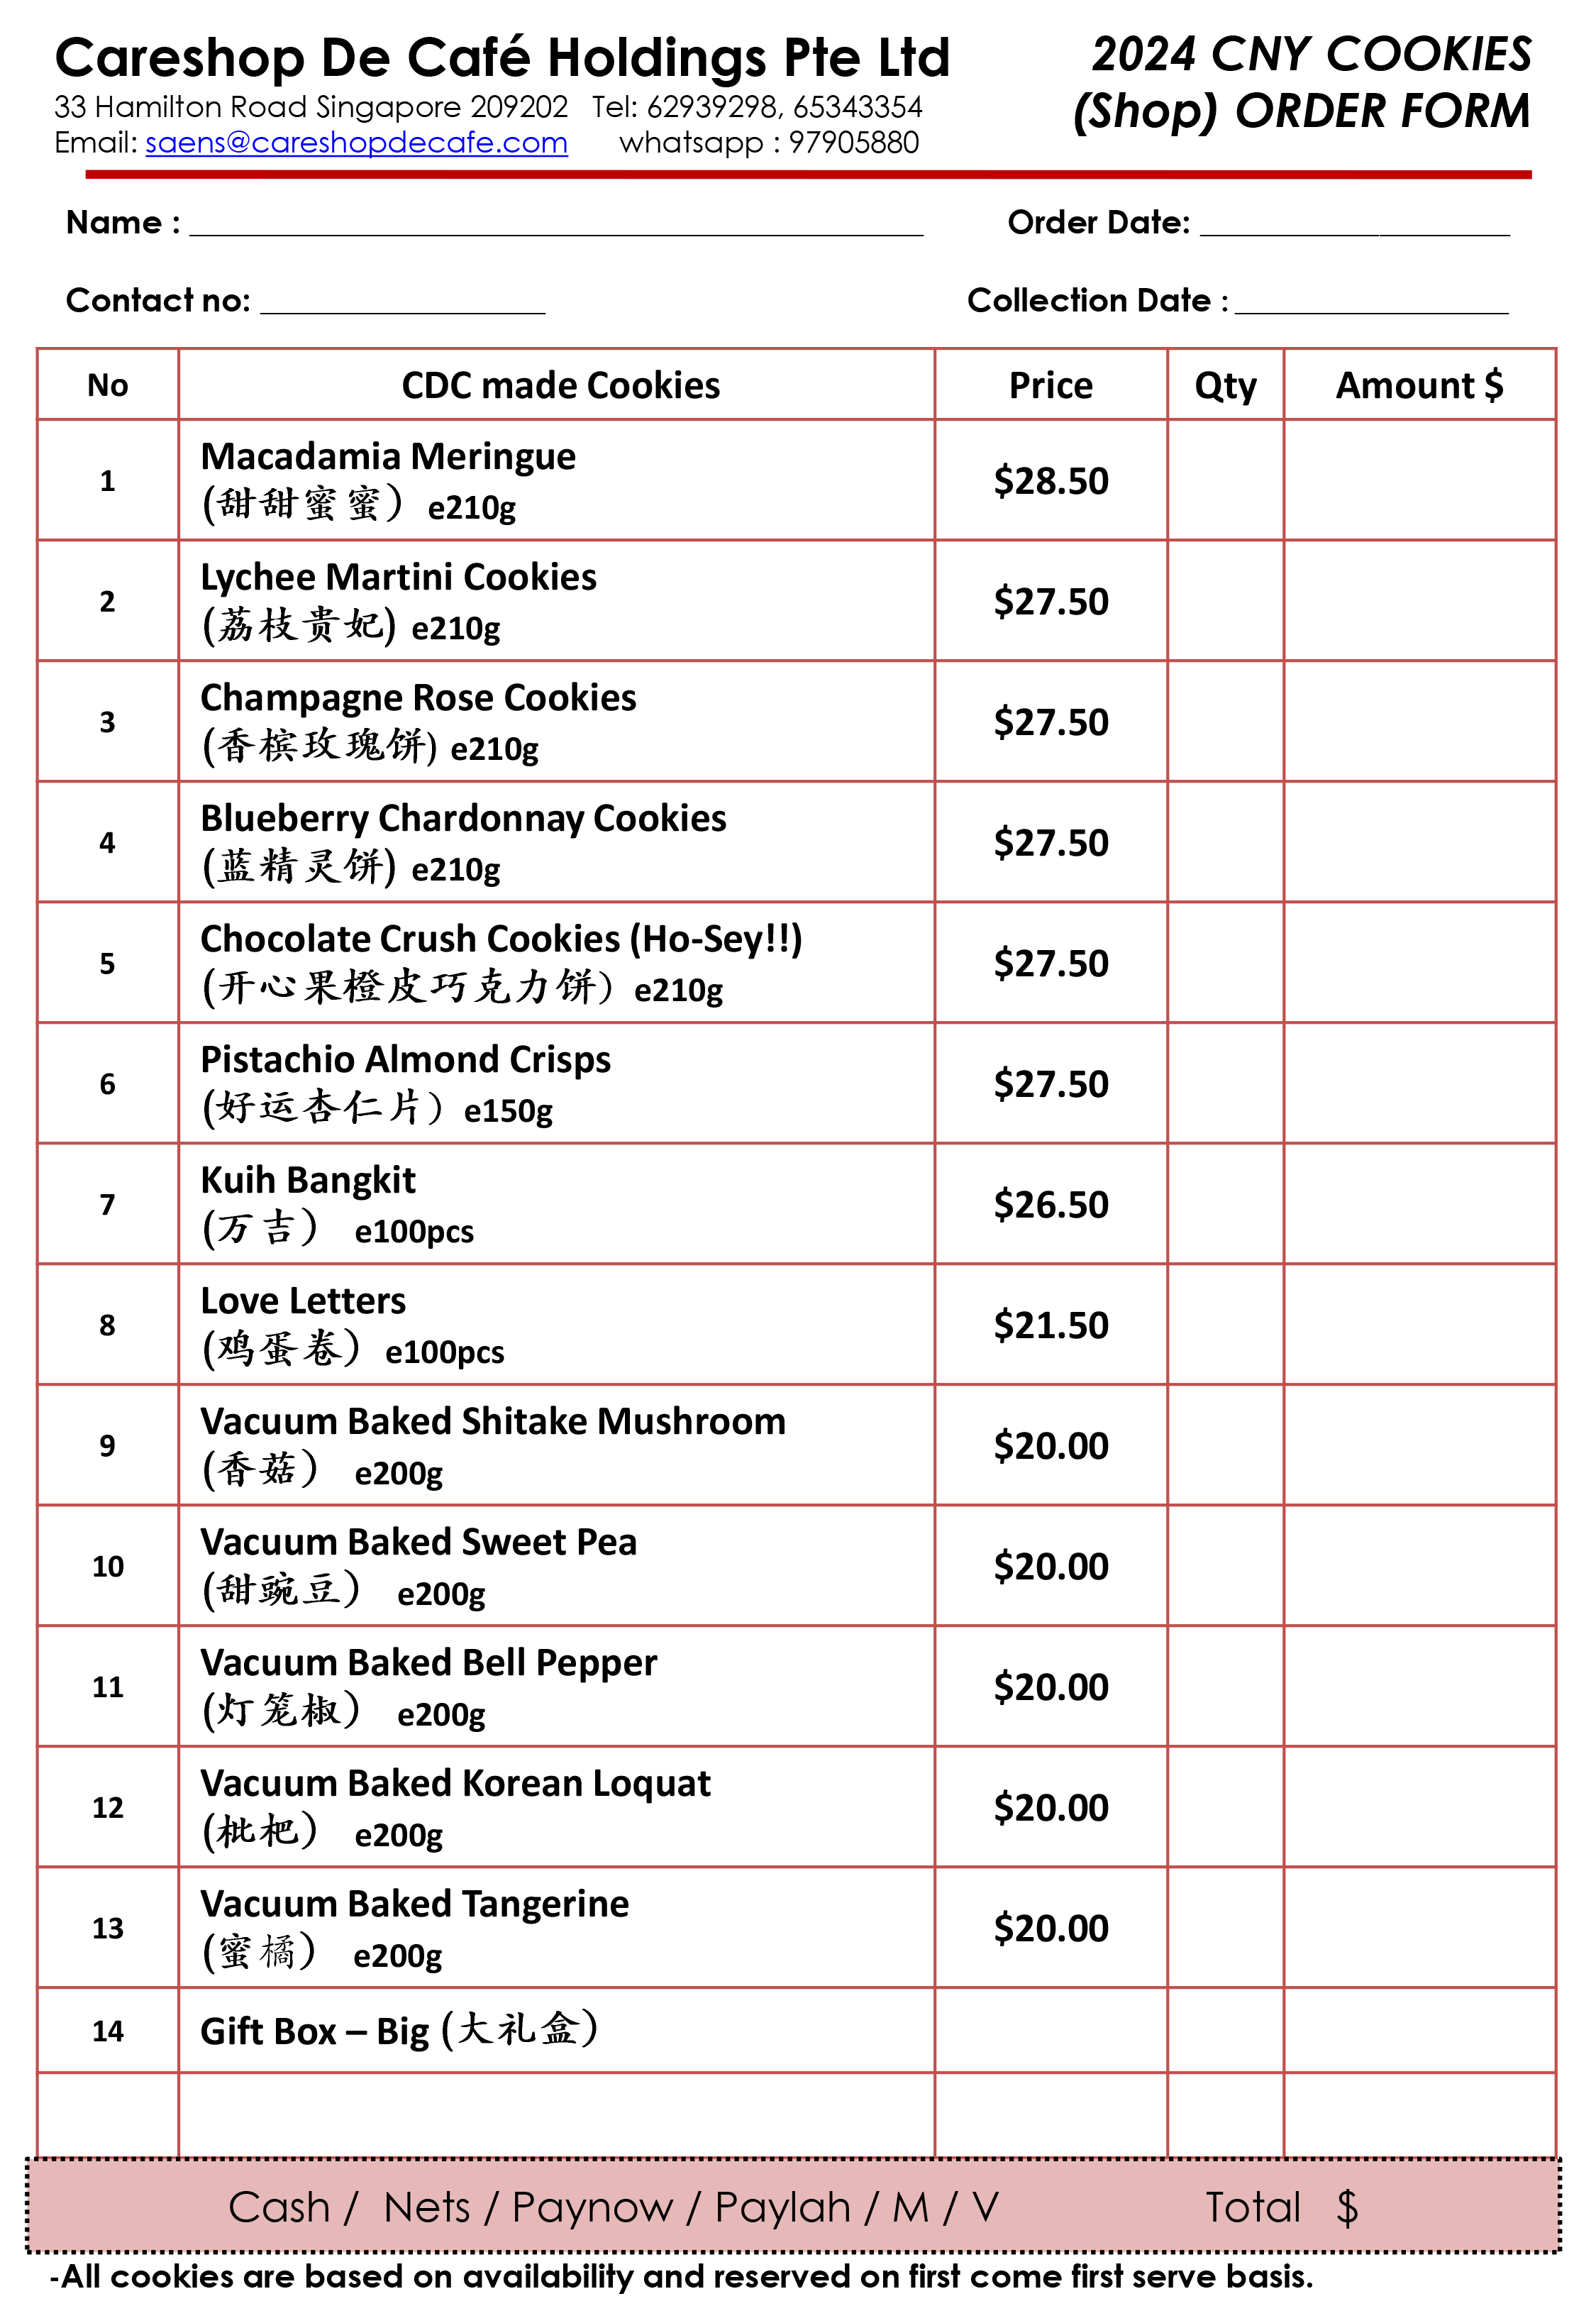 CDC CNY Cookies - Shop Order Form 2024